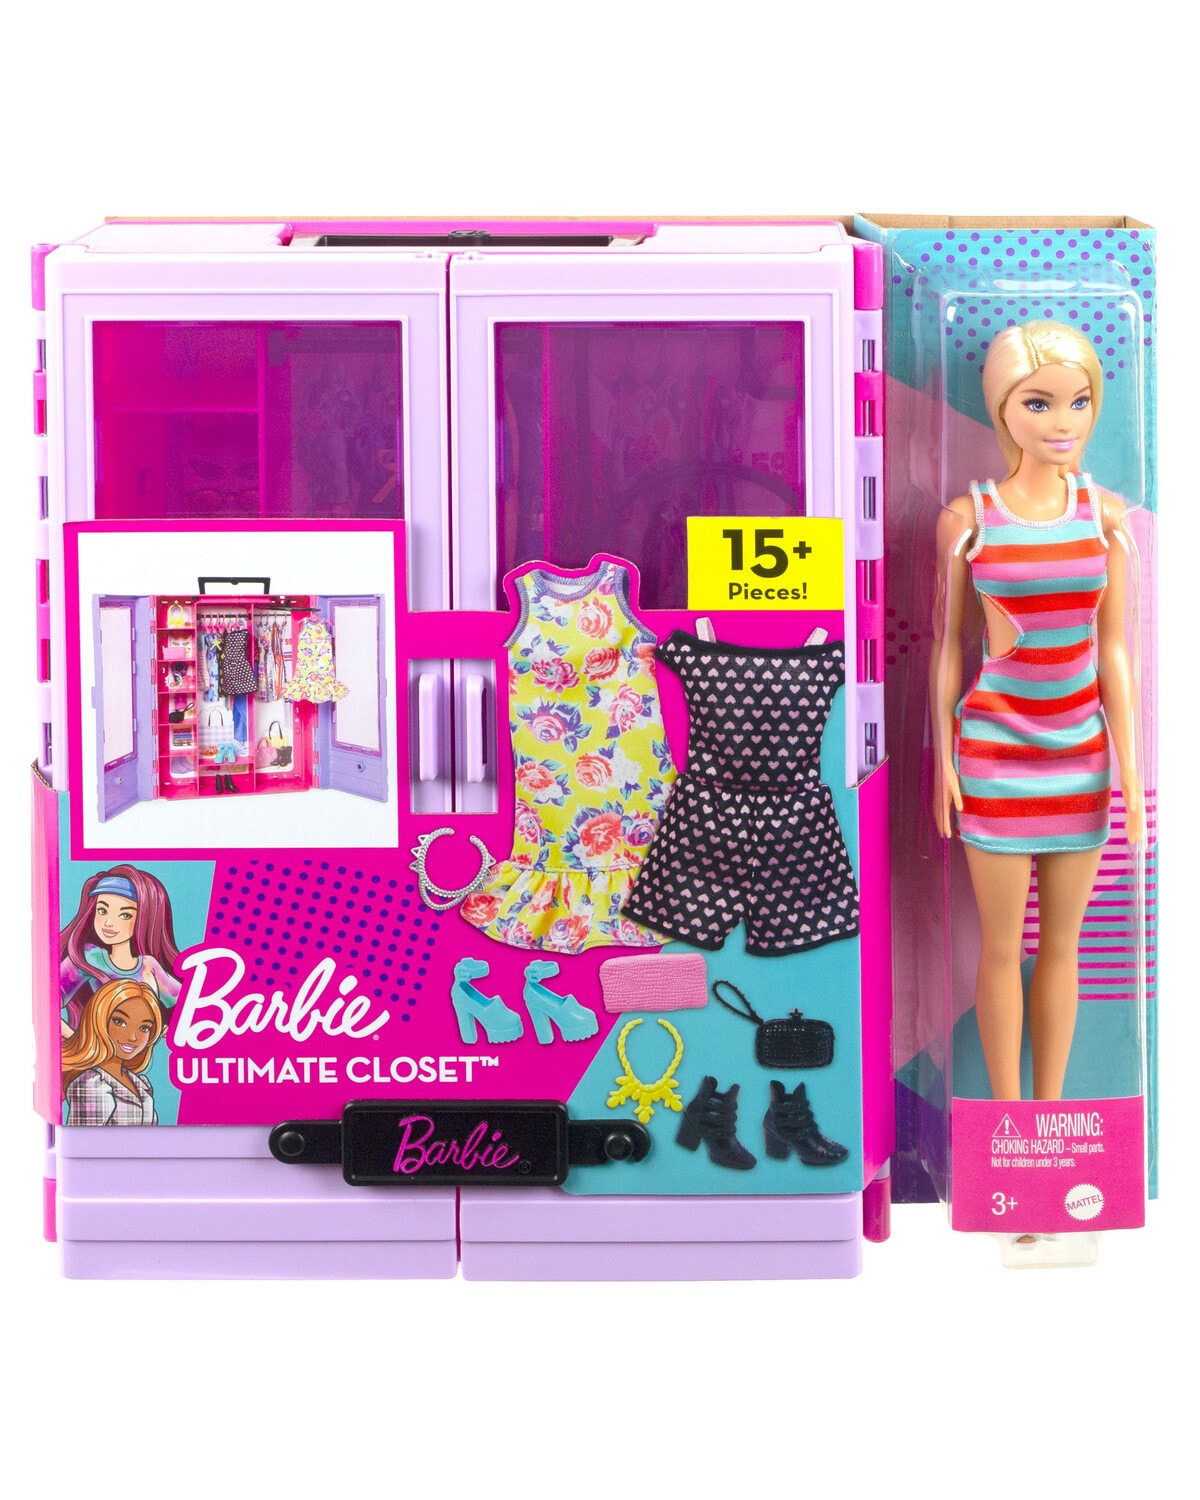 Barbie Ultimate Closet & Doll - Dolls & Accessories